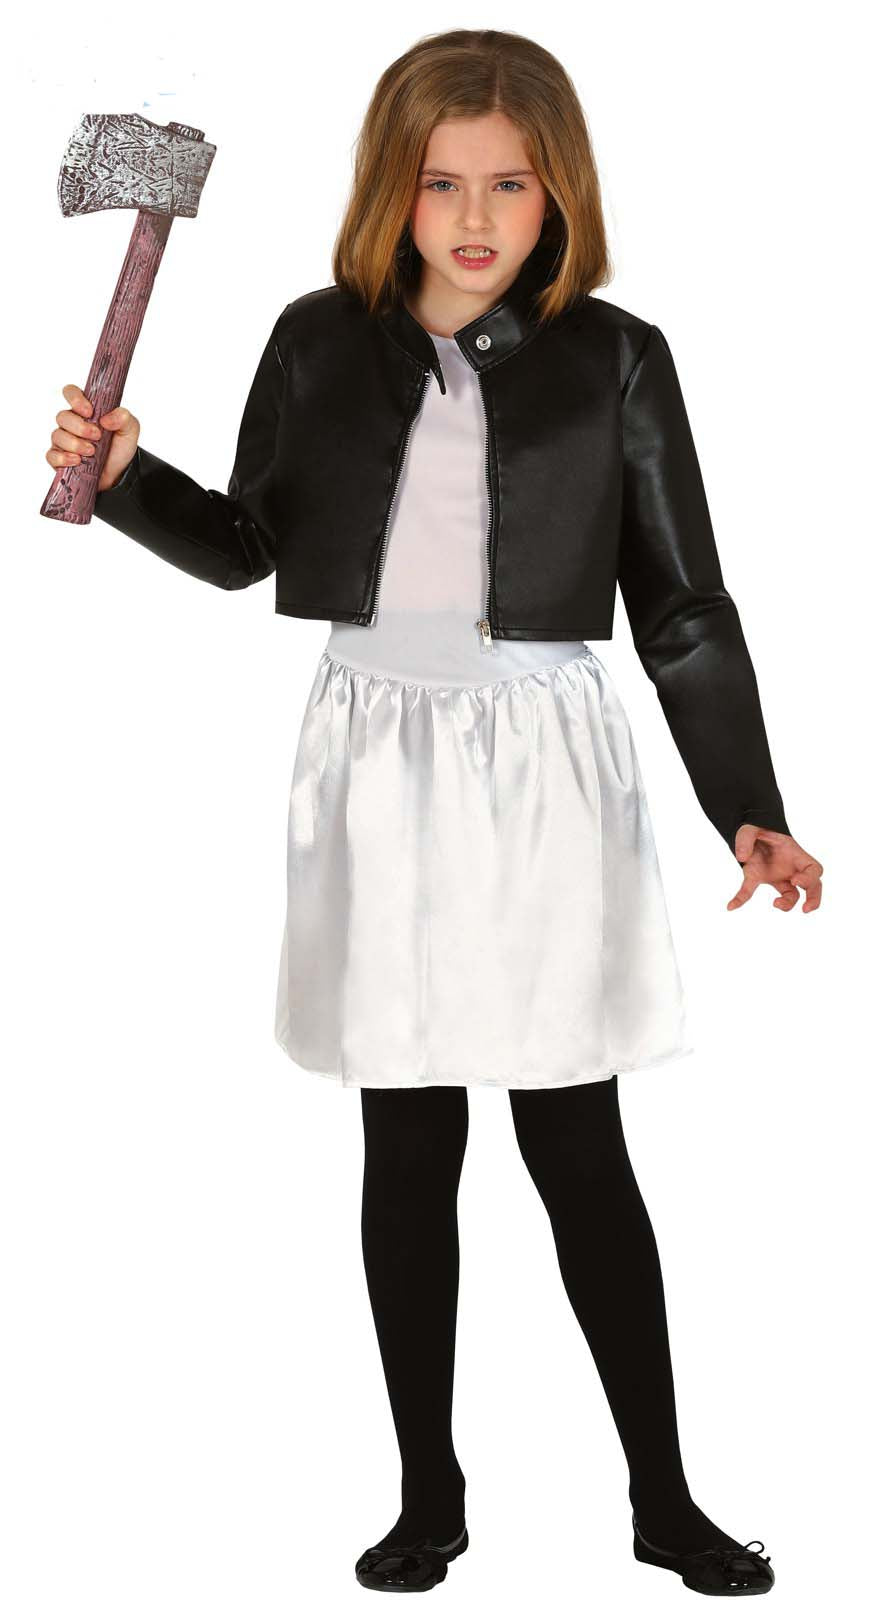 Killer Doll Tiffany Costume Girl like Chucky's Bride